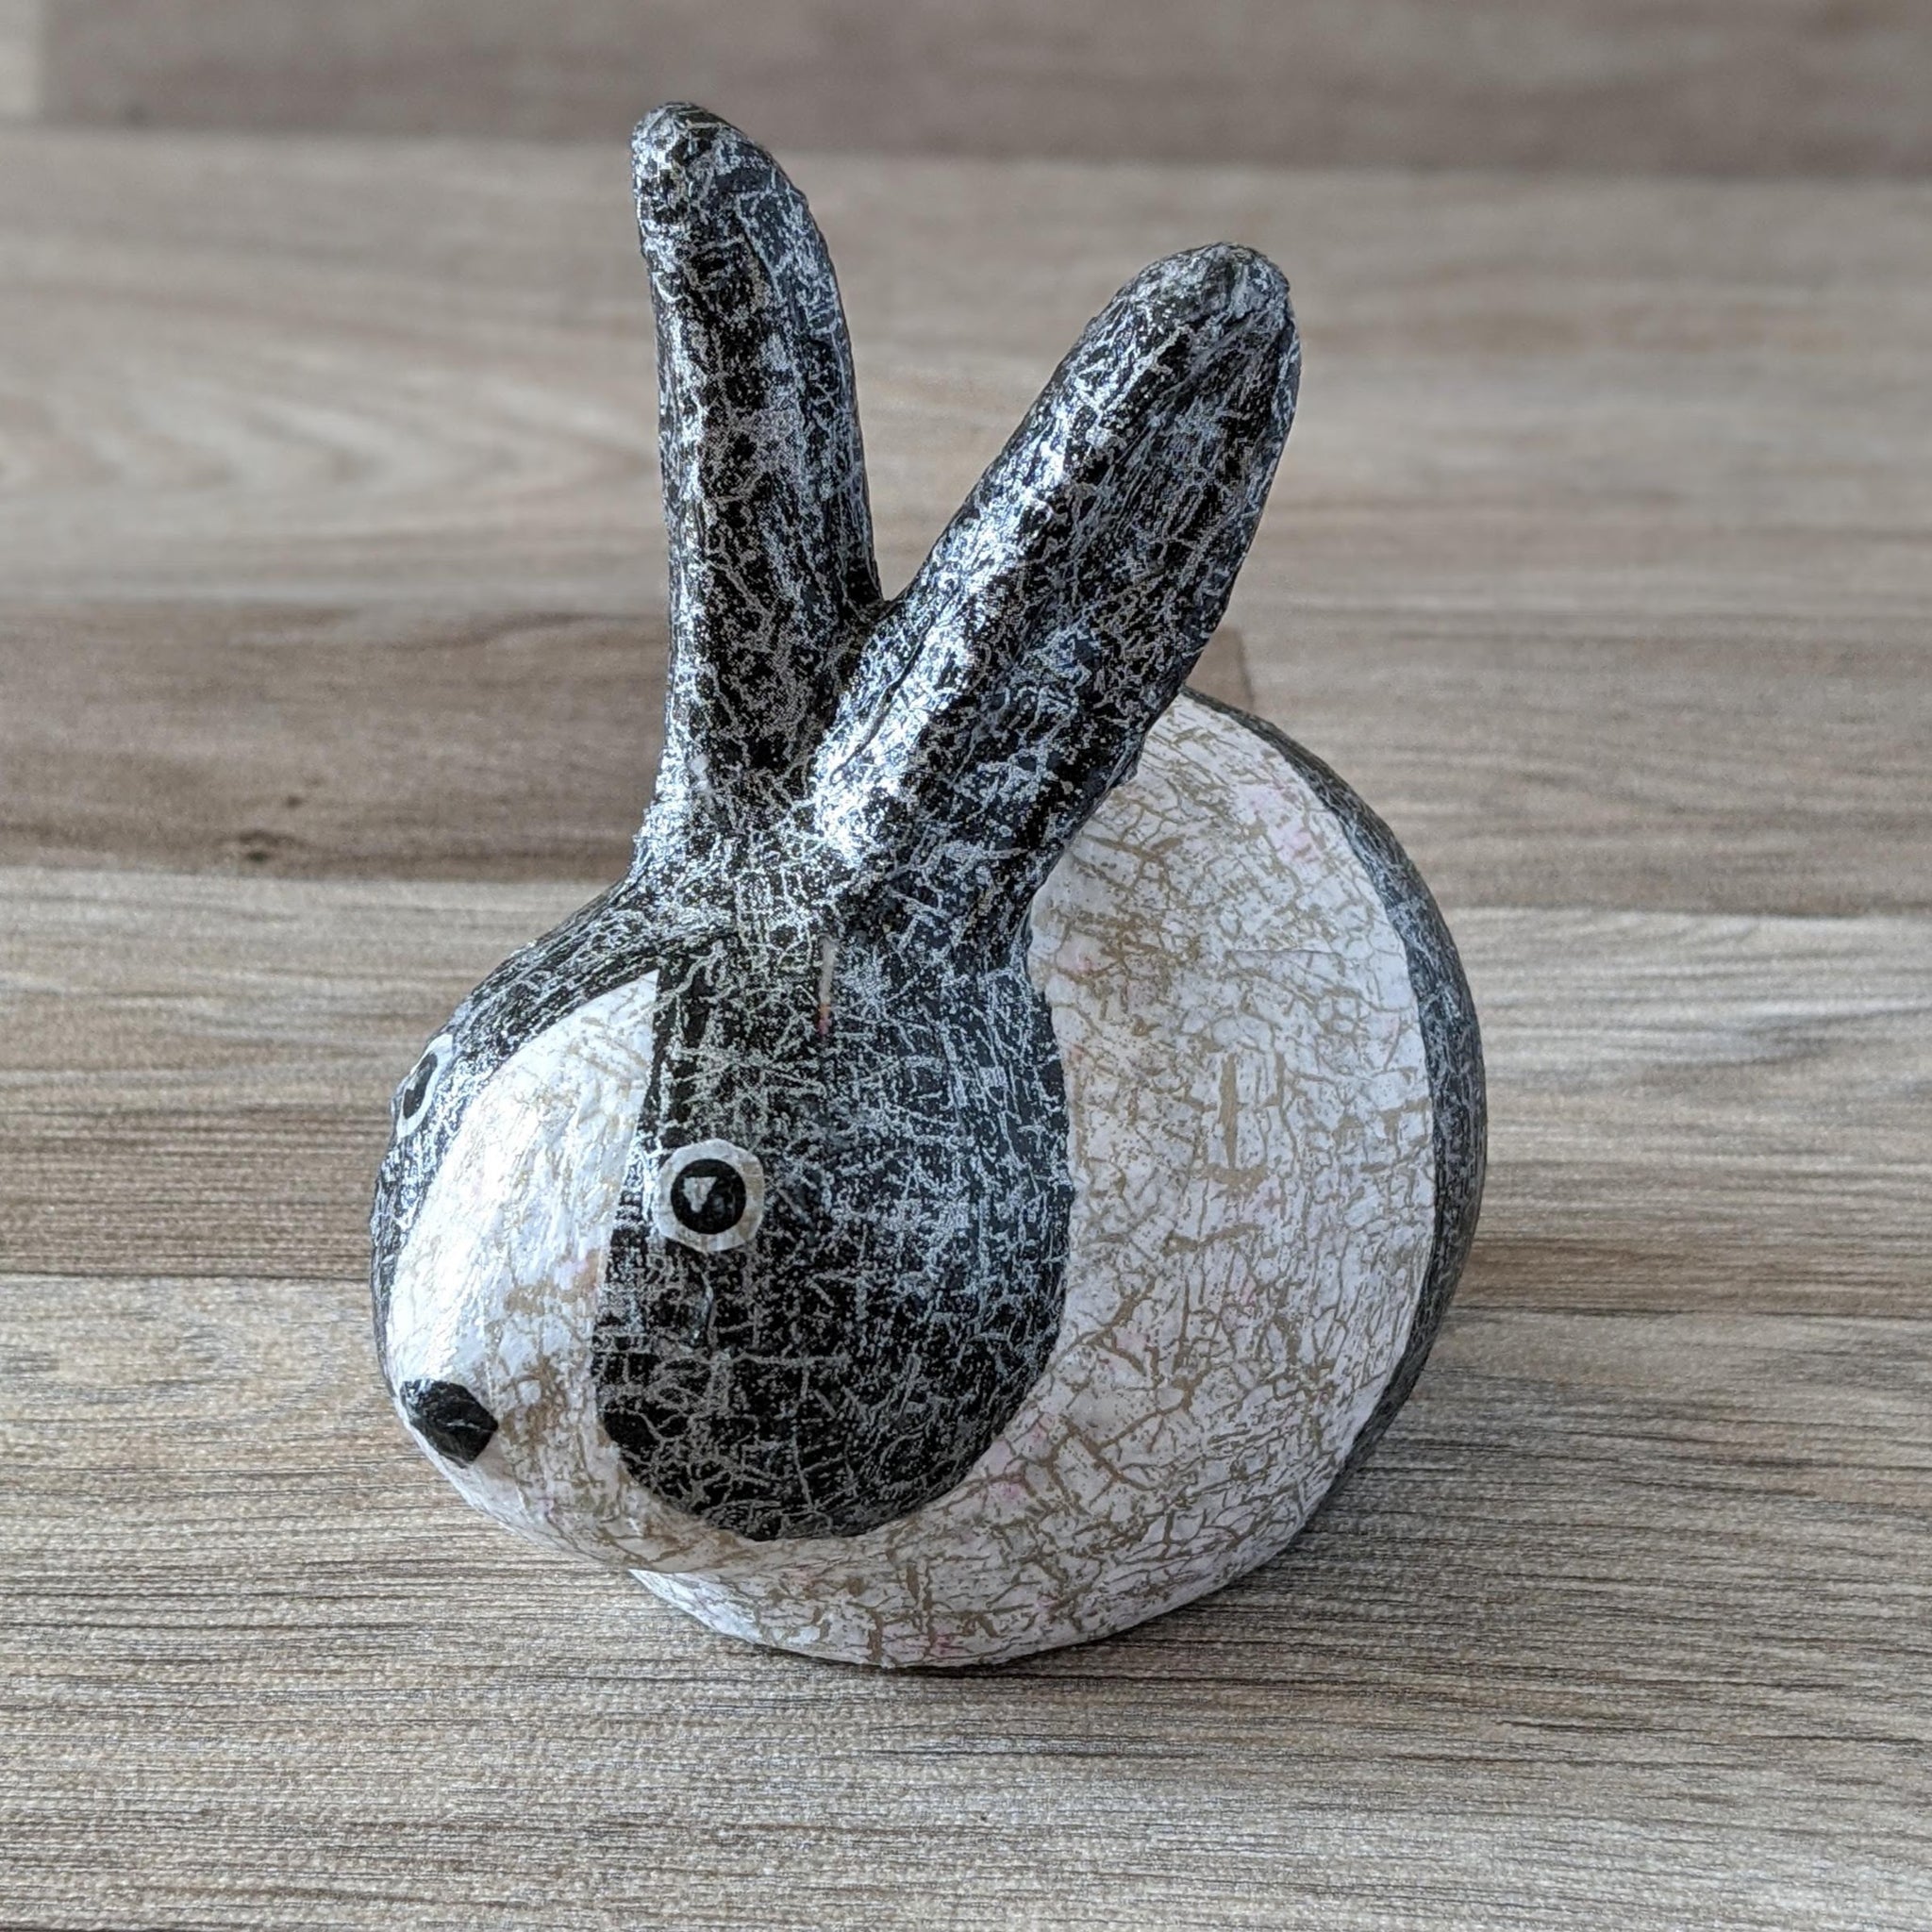 Decopatch a Ceramic Rabbit Ornament Craft Kit (Black & White)